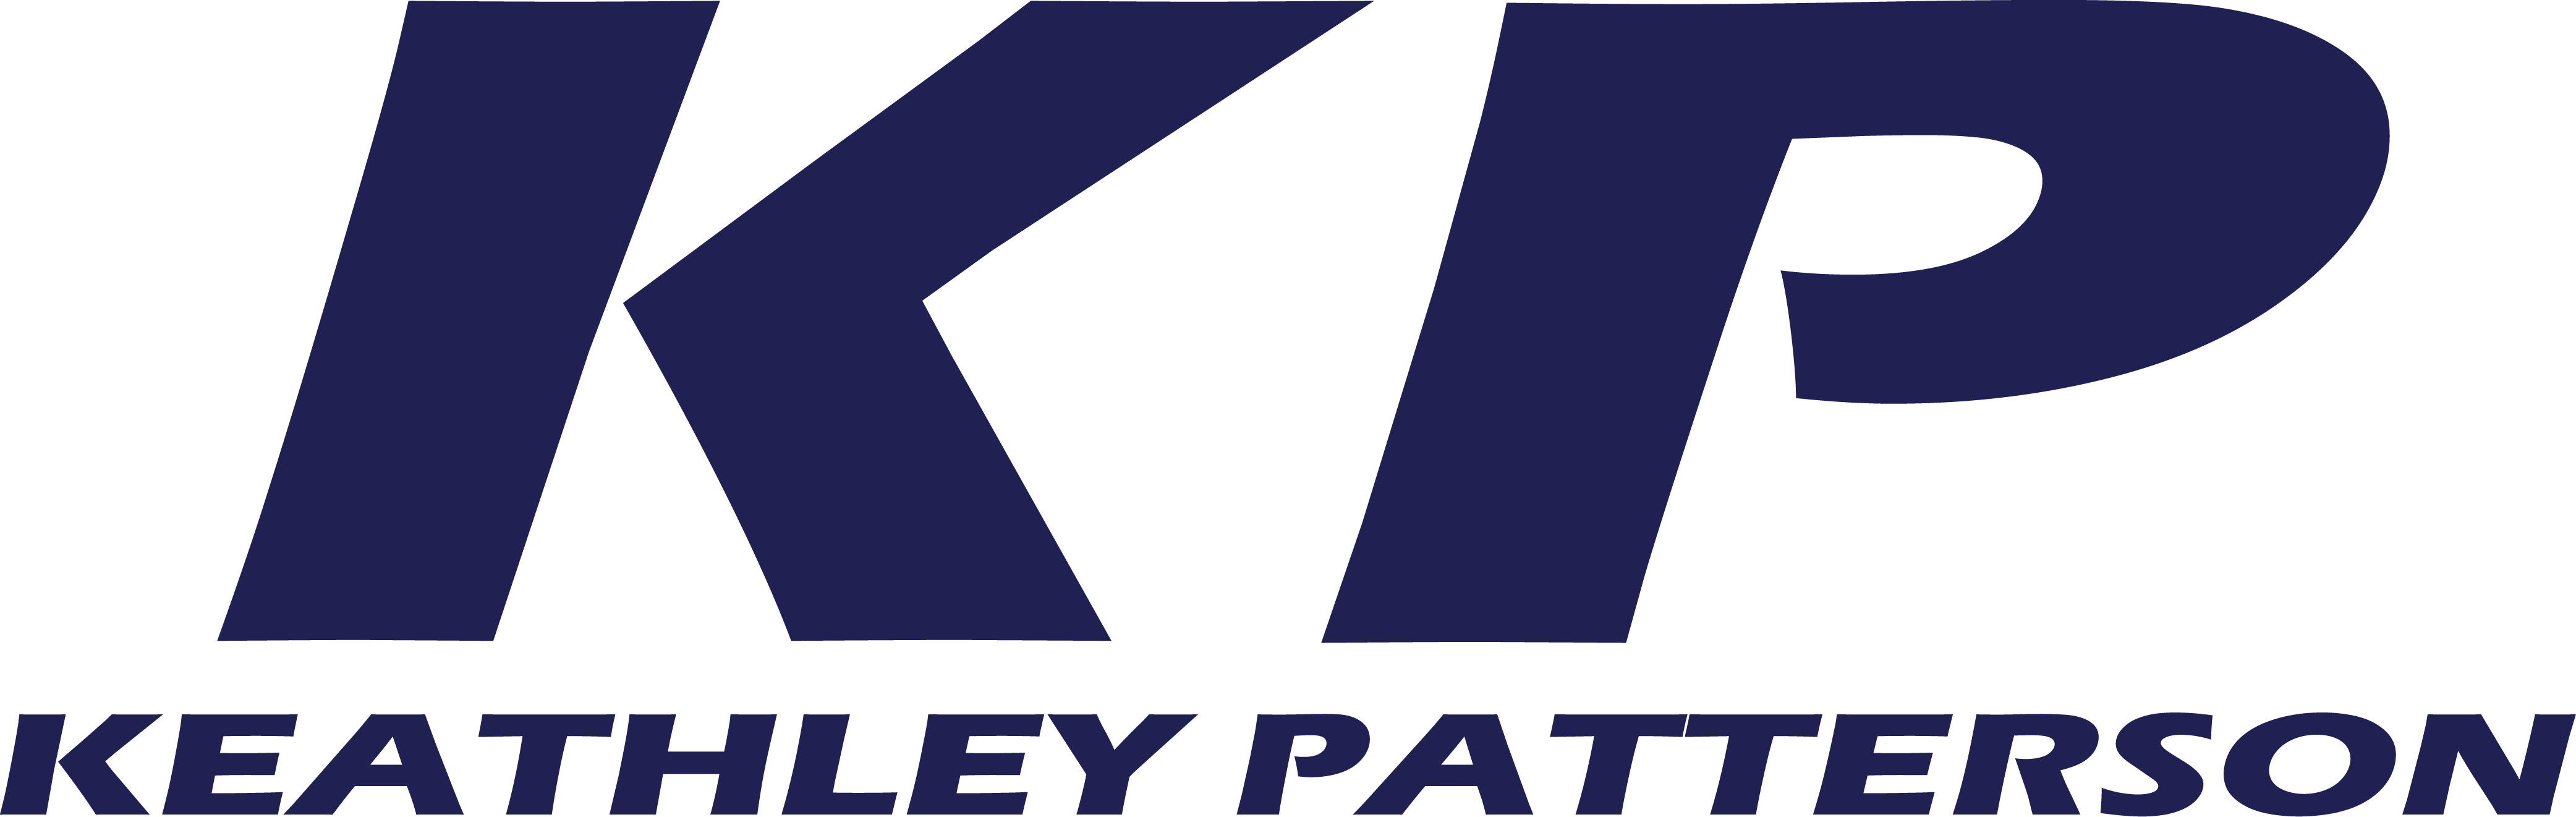 Keathley Patterson Logo